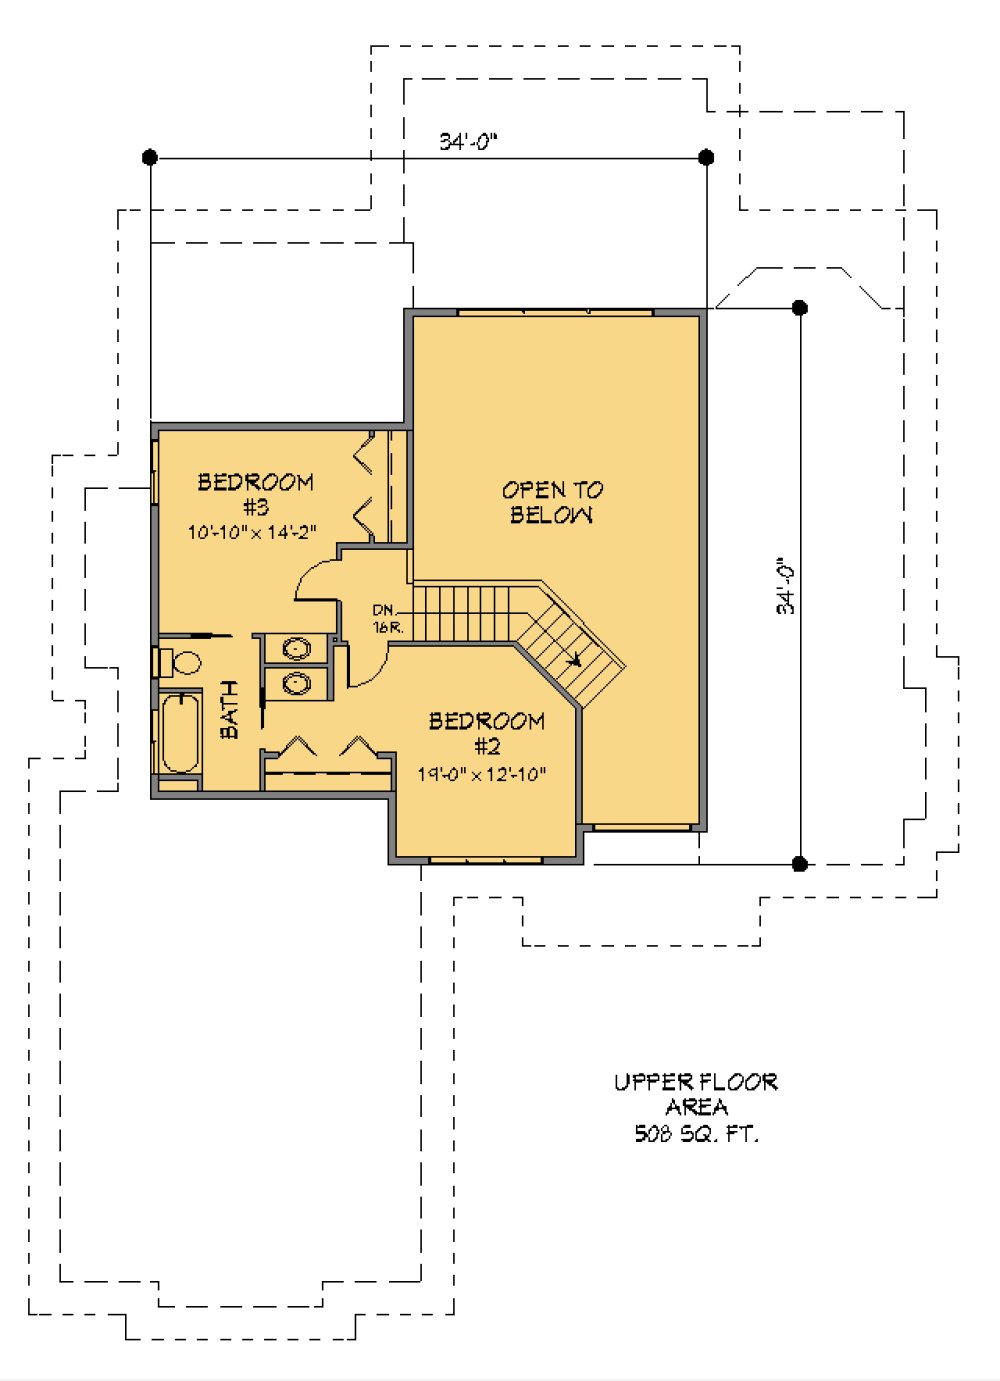 House Plan 